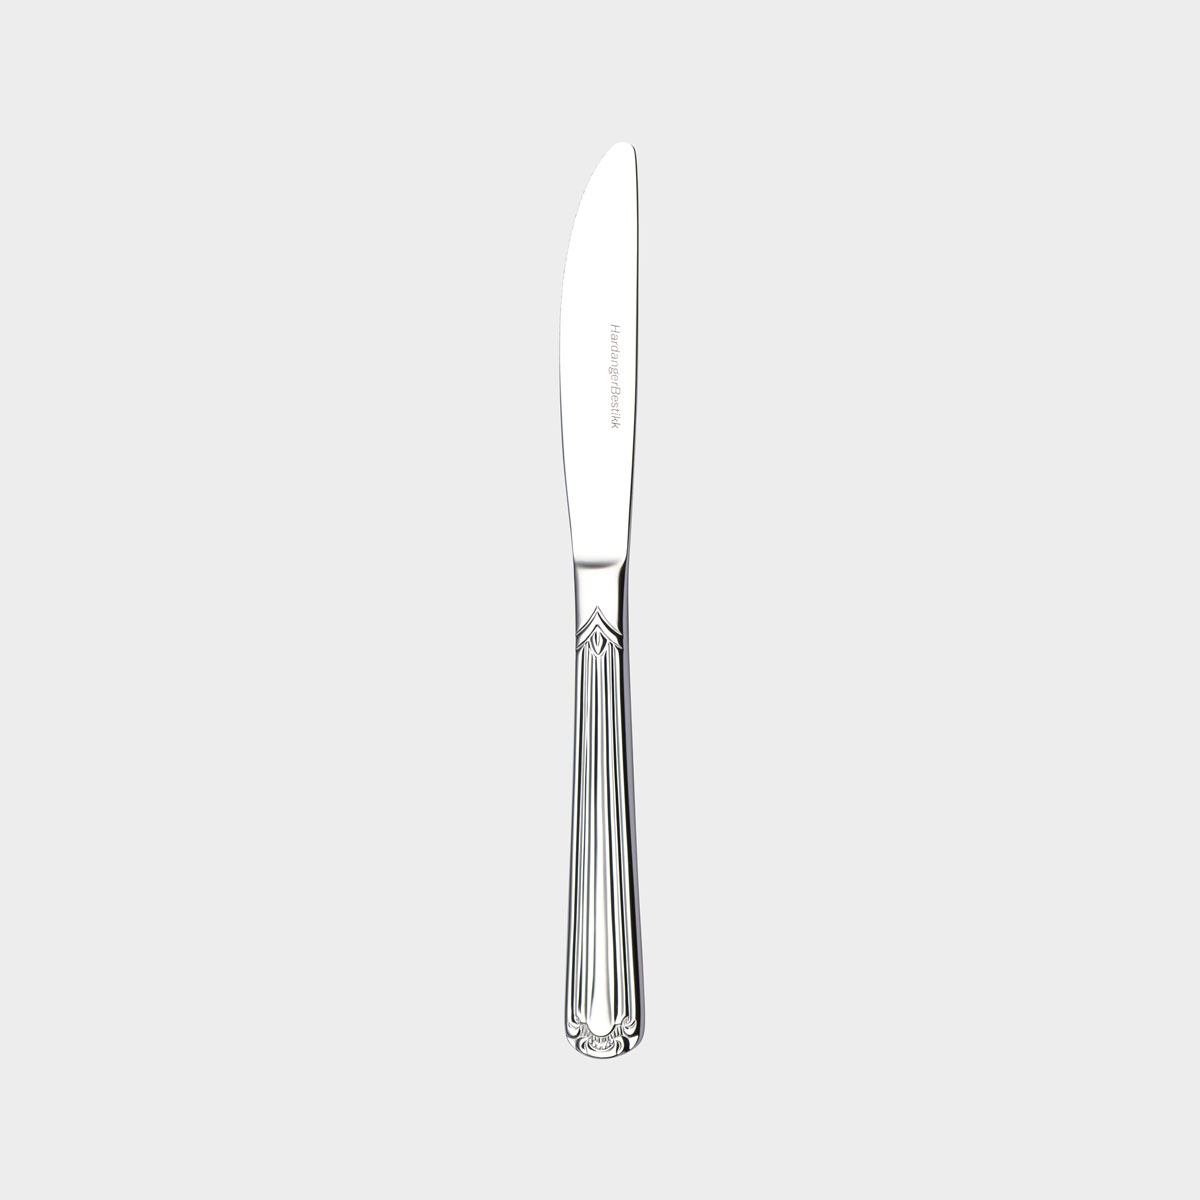 Renessanse appetizer knife product image